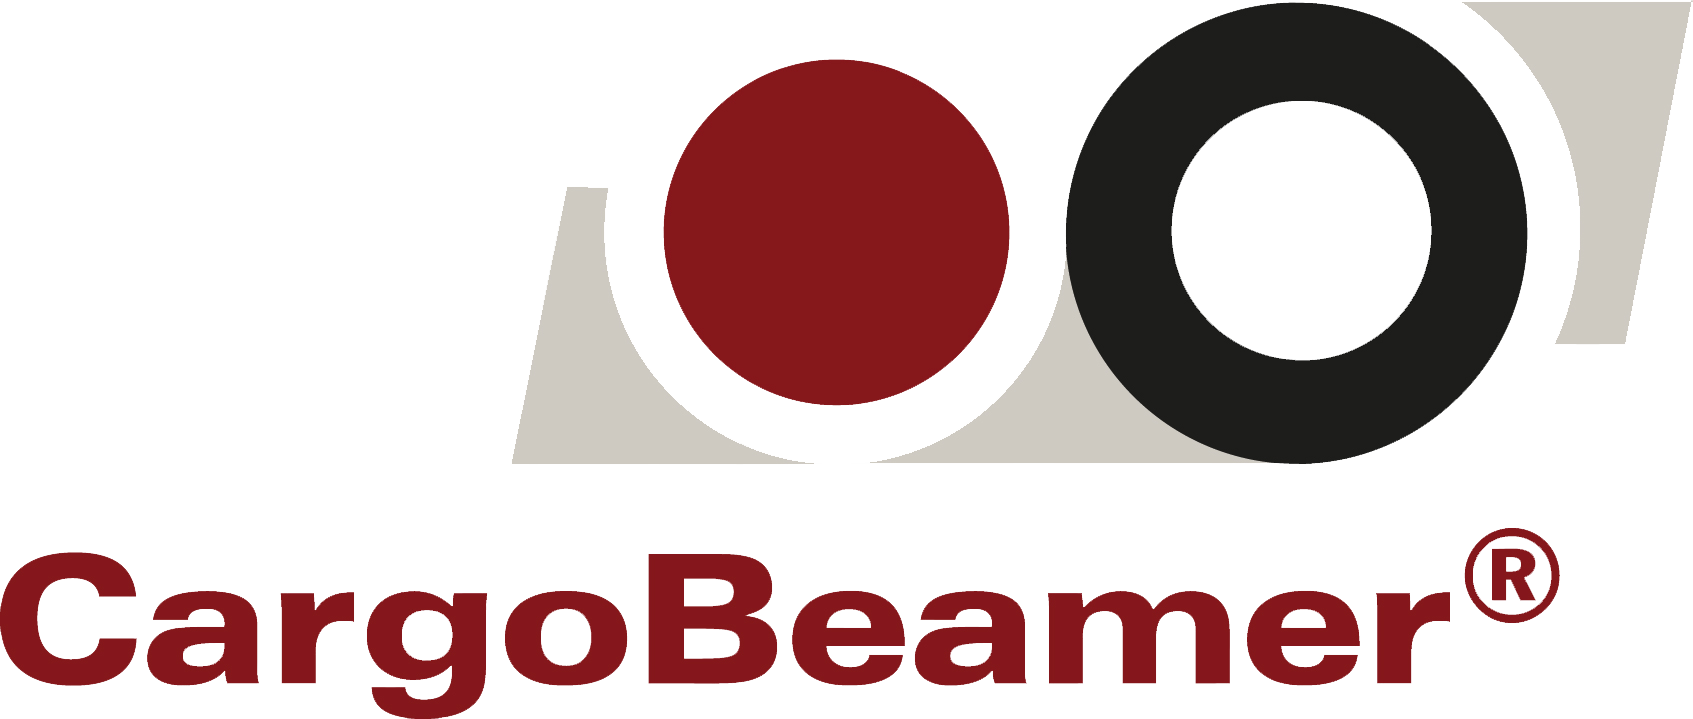 CargoBeamer Group logo